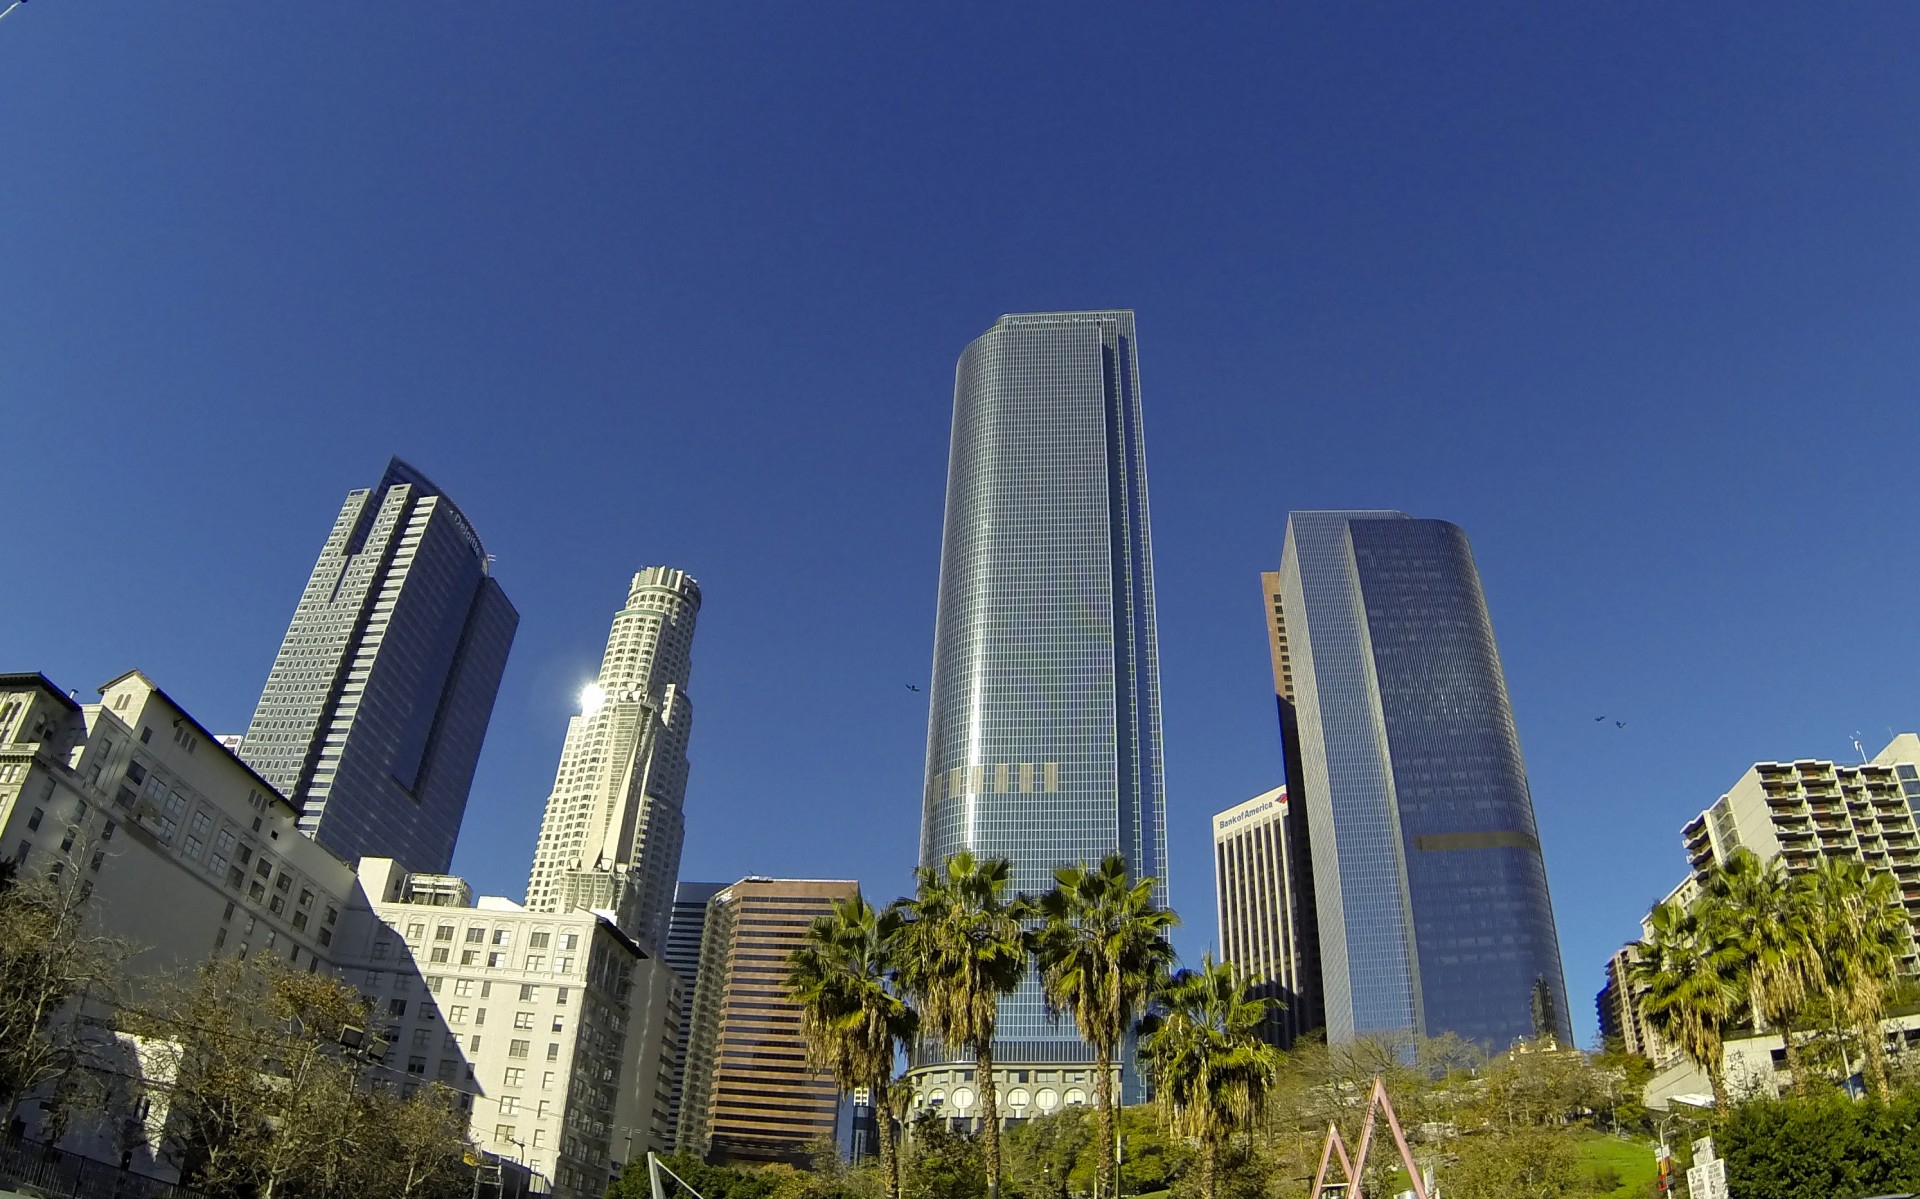 Fisheye shot capturing some skyscrapers in Downtown LA